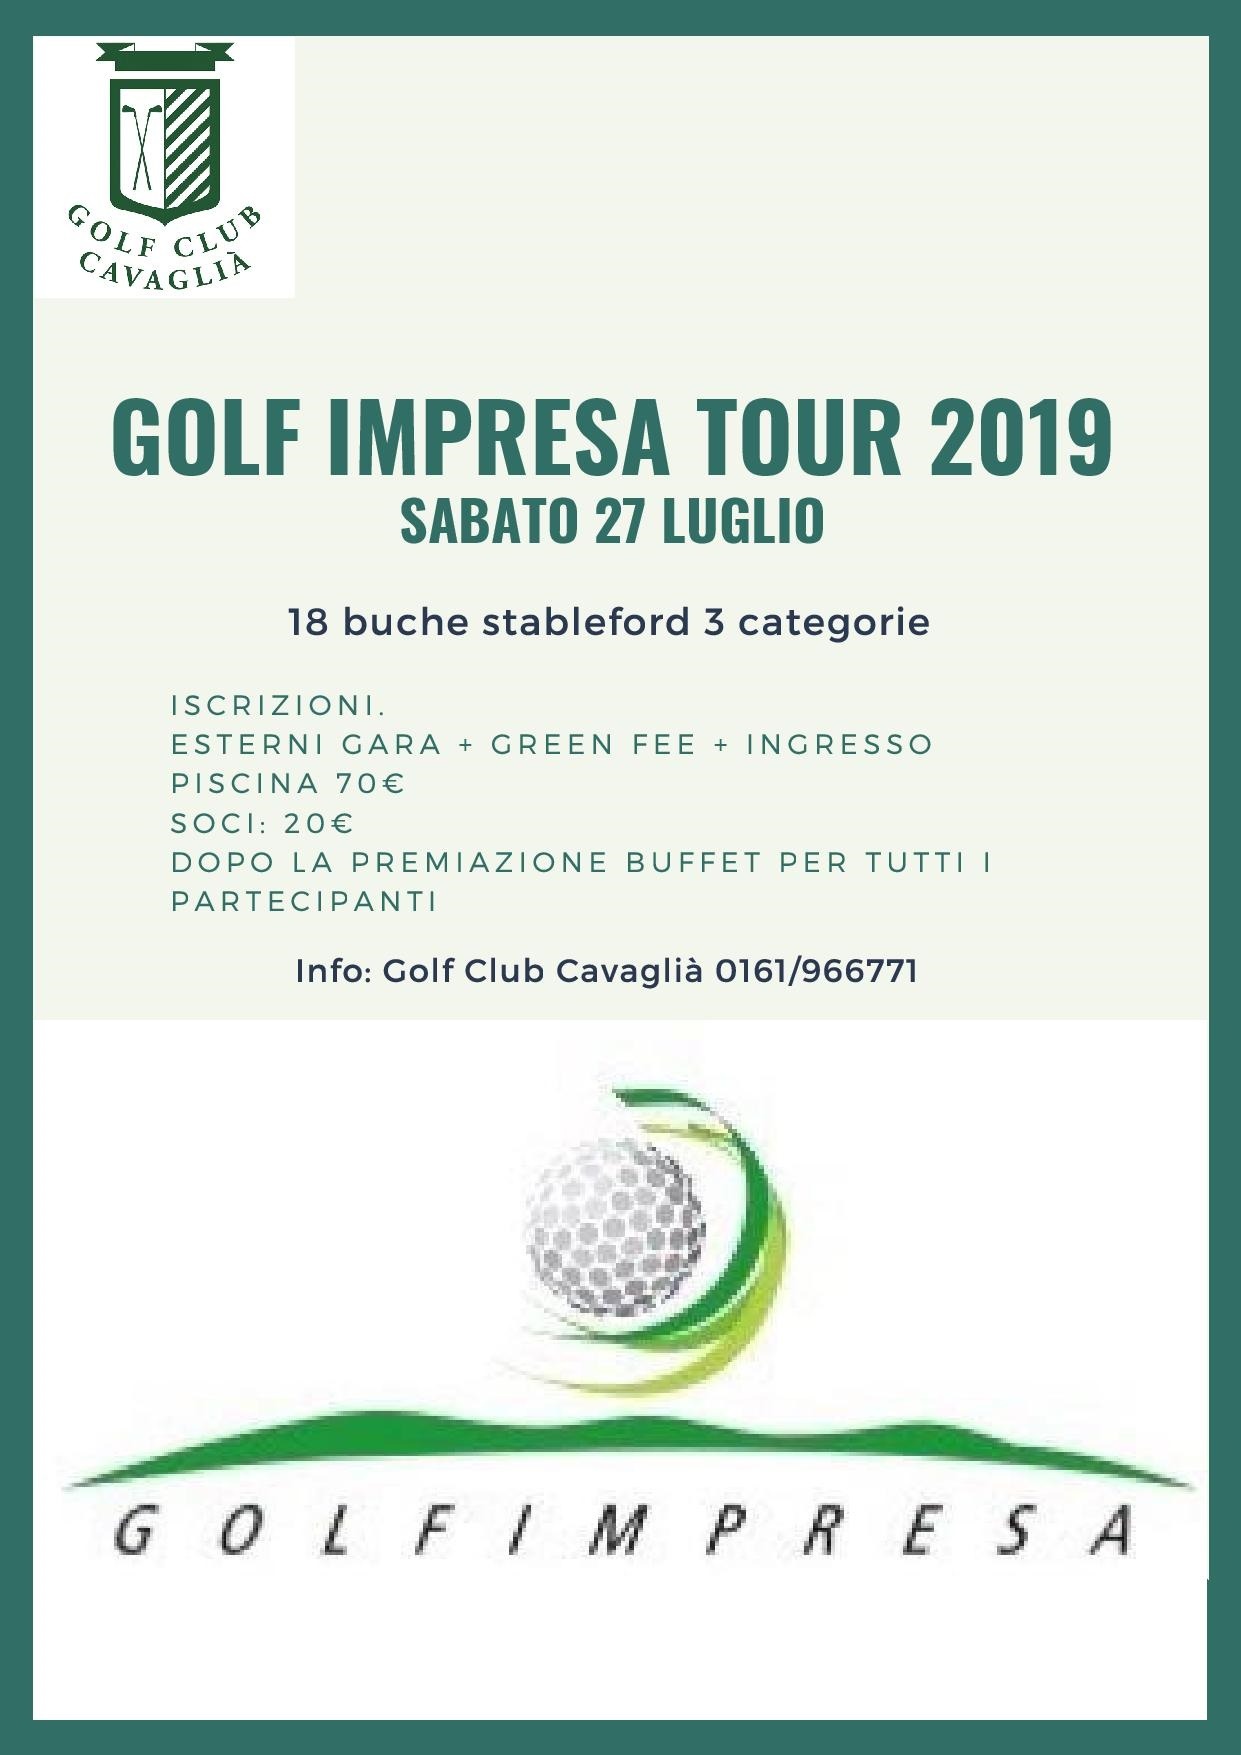 Sabato con il Golf Impresa Tour 2019